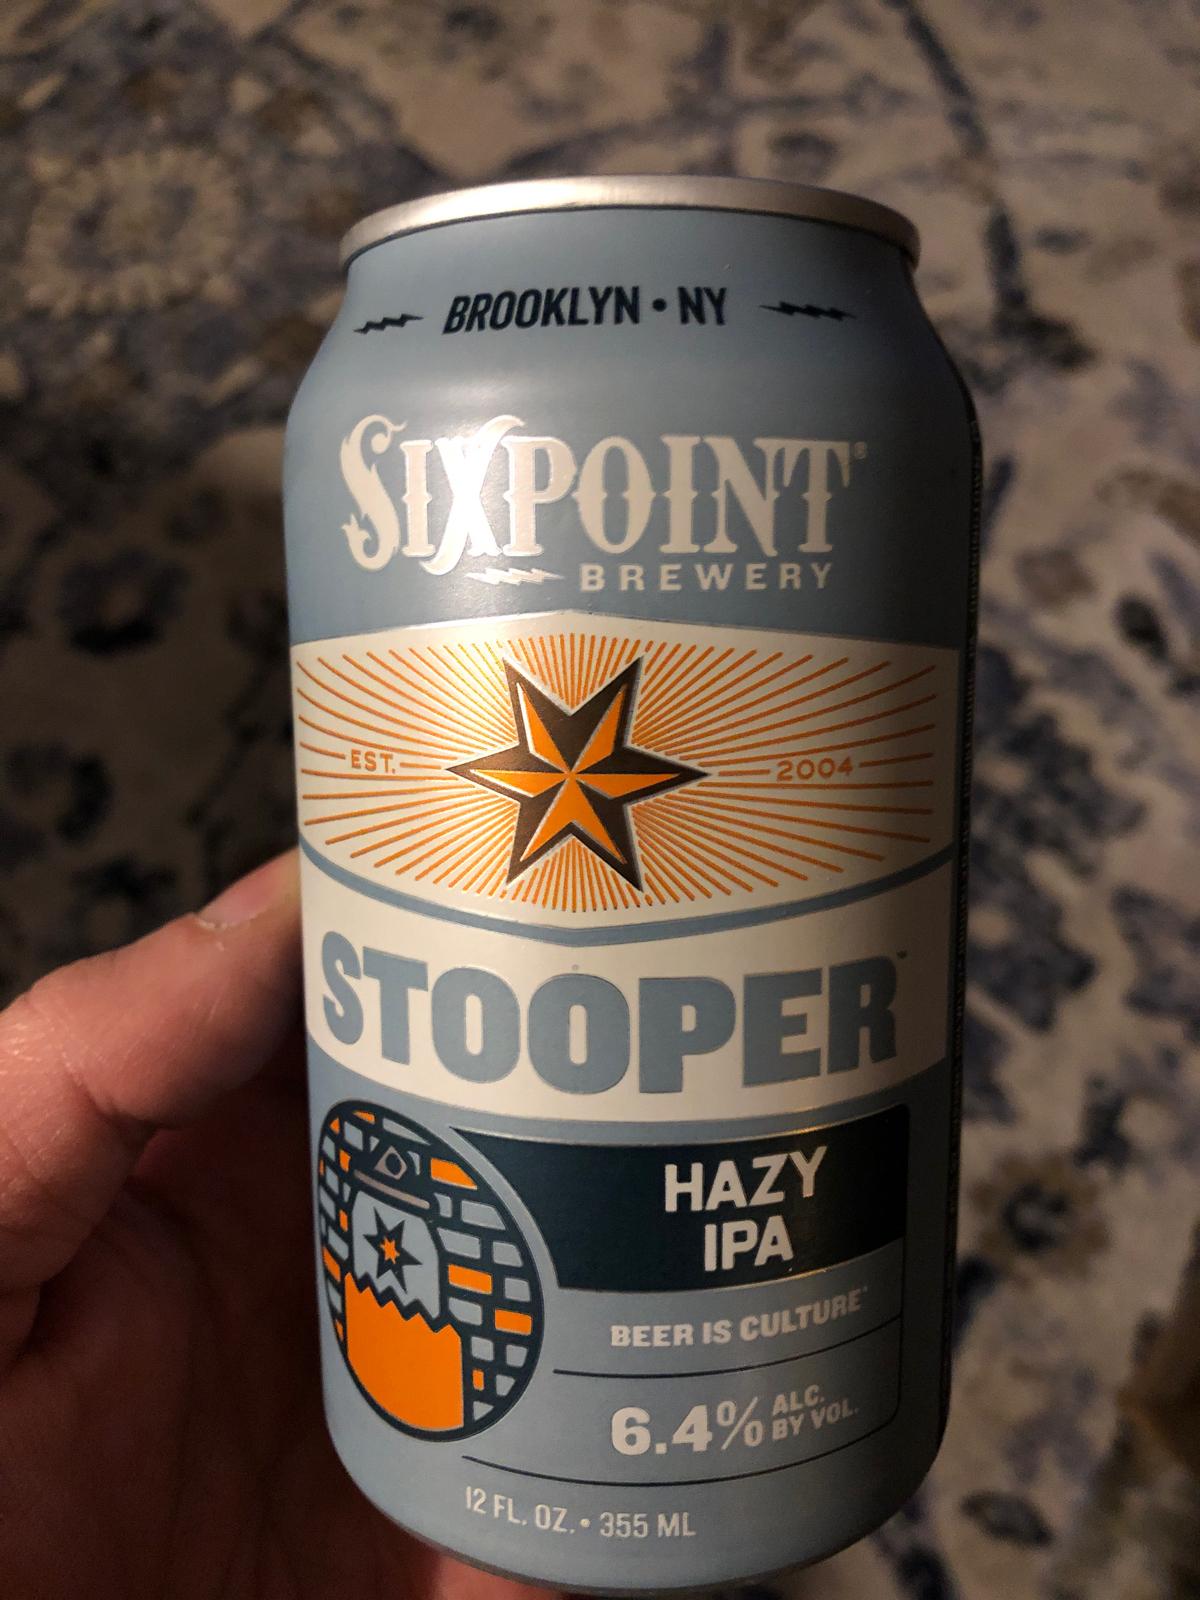 Stooper